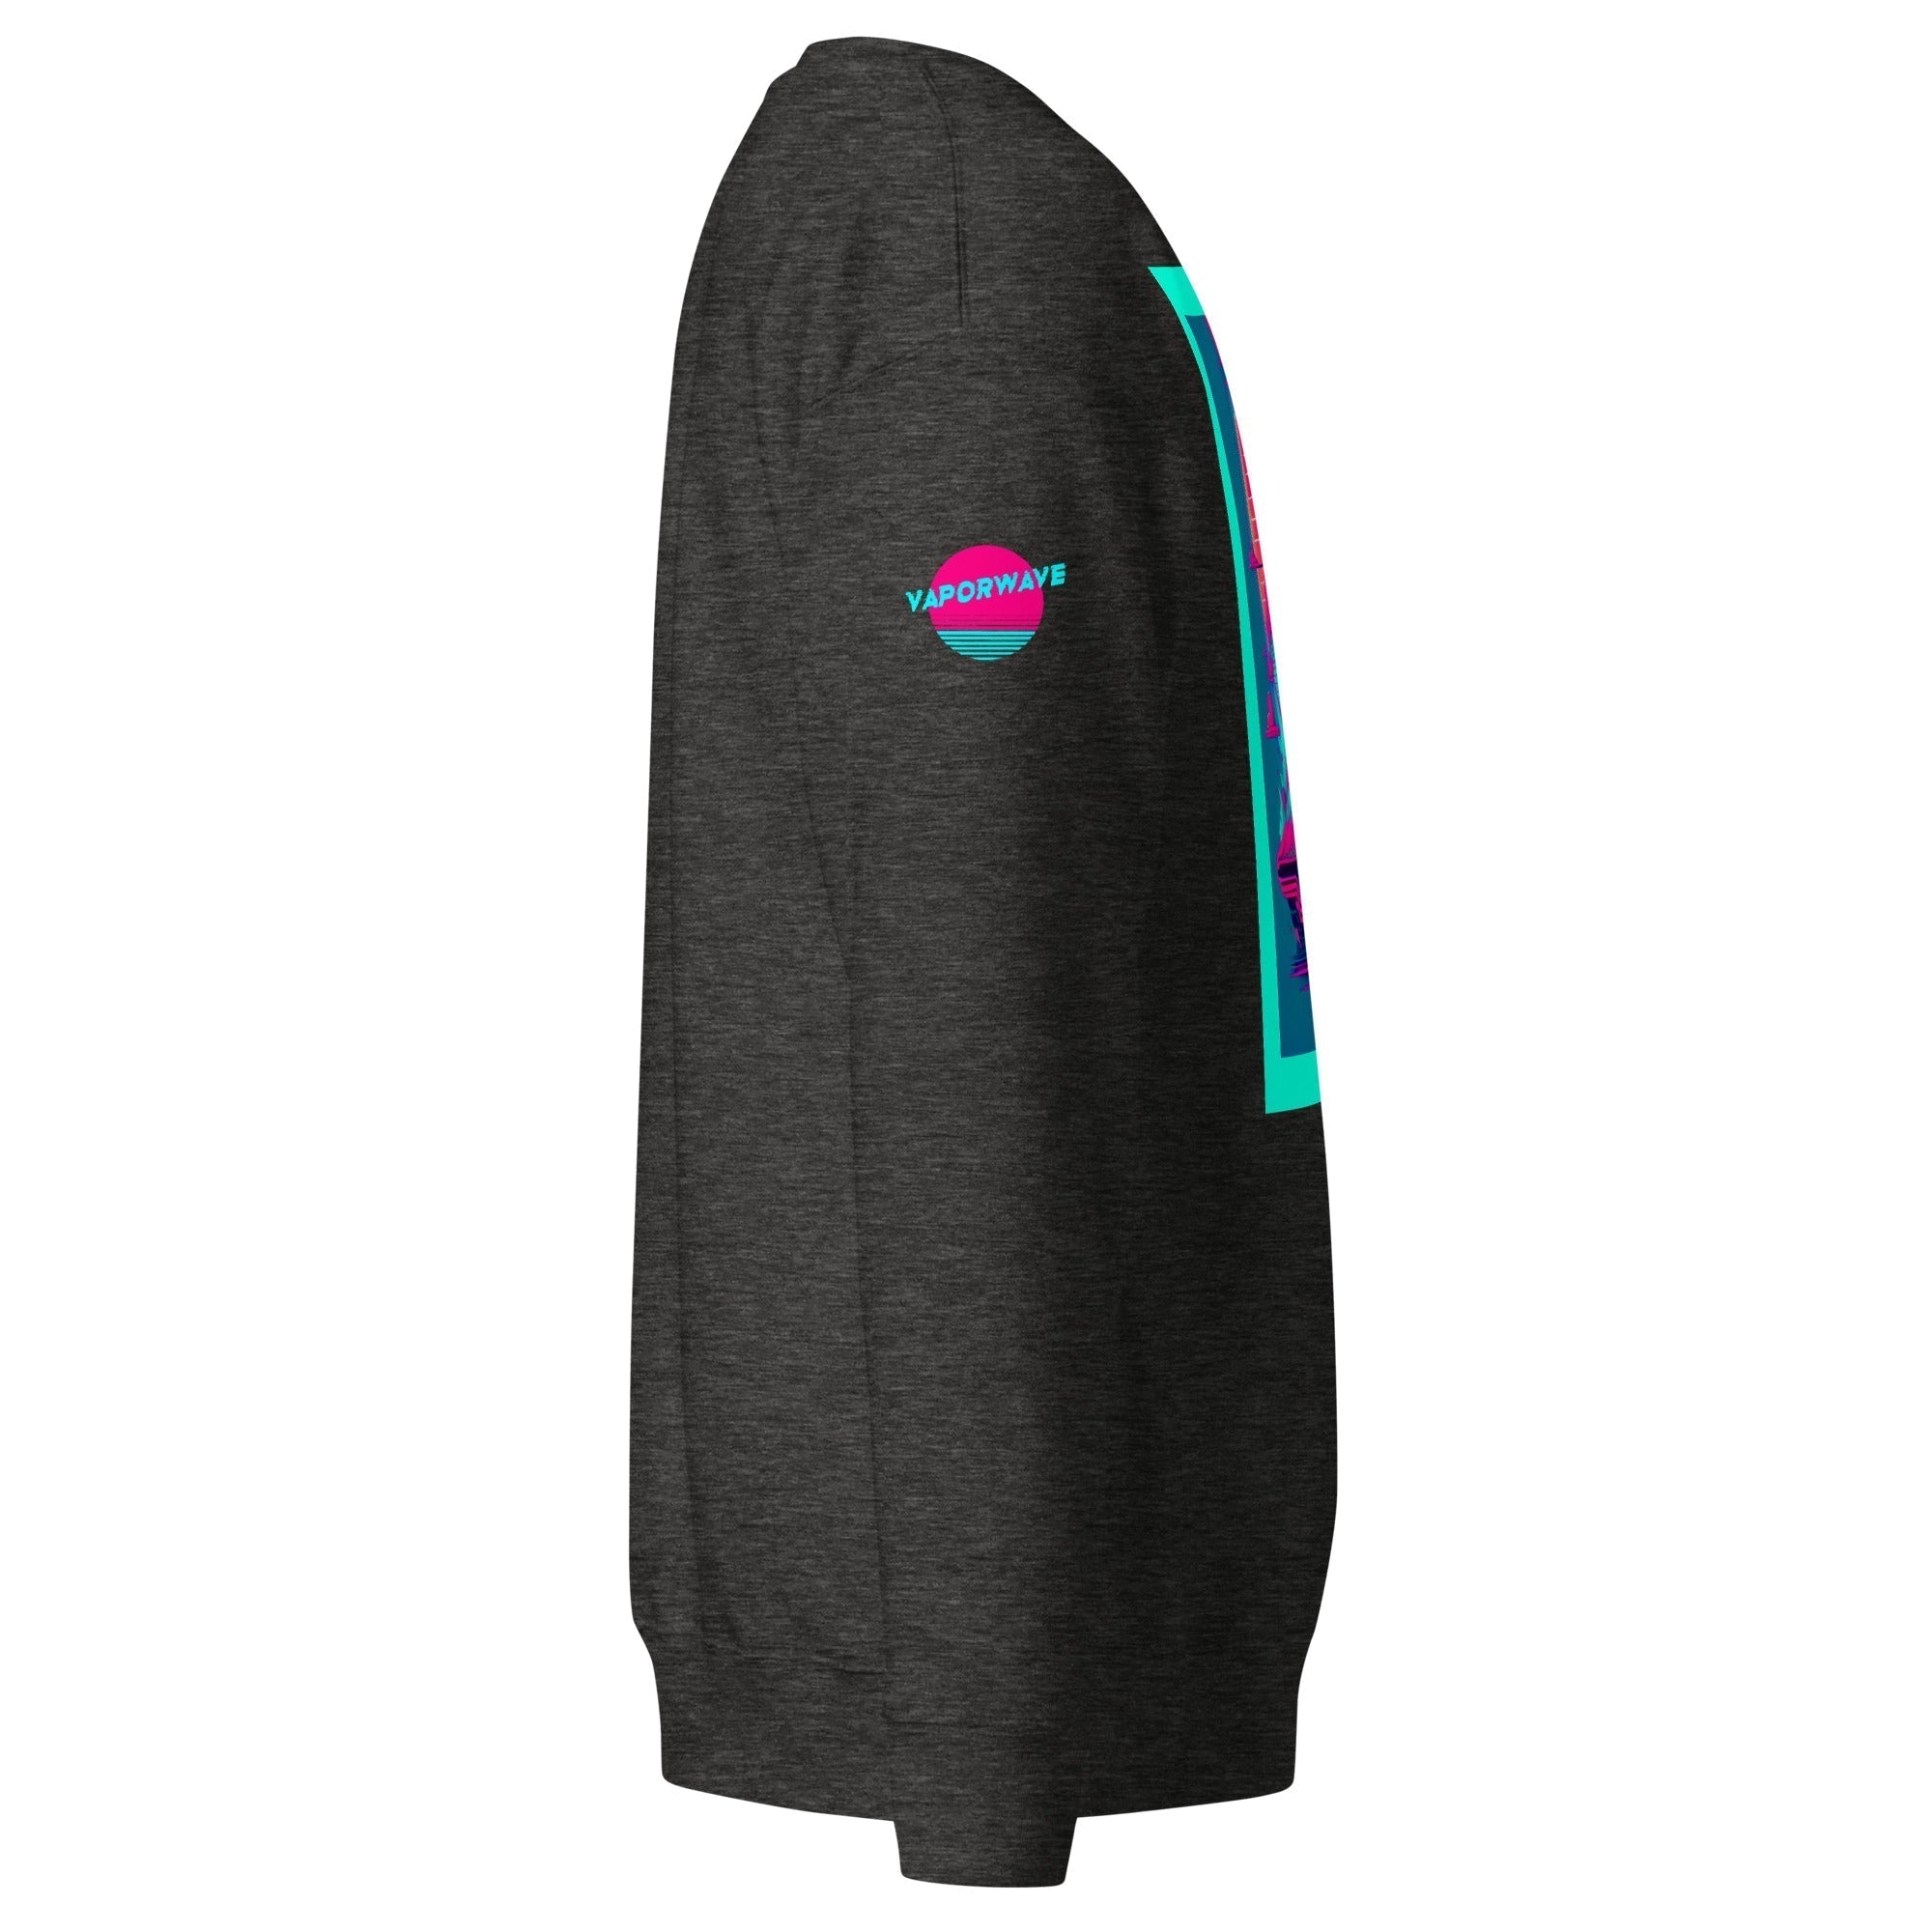 Unisex Premium Sweatshirt - Vaporwave Series v.28 - GRAPHIC T-SHIRTS